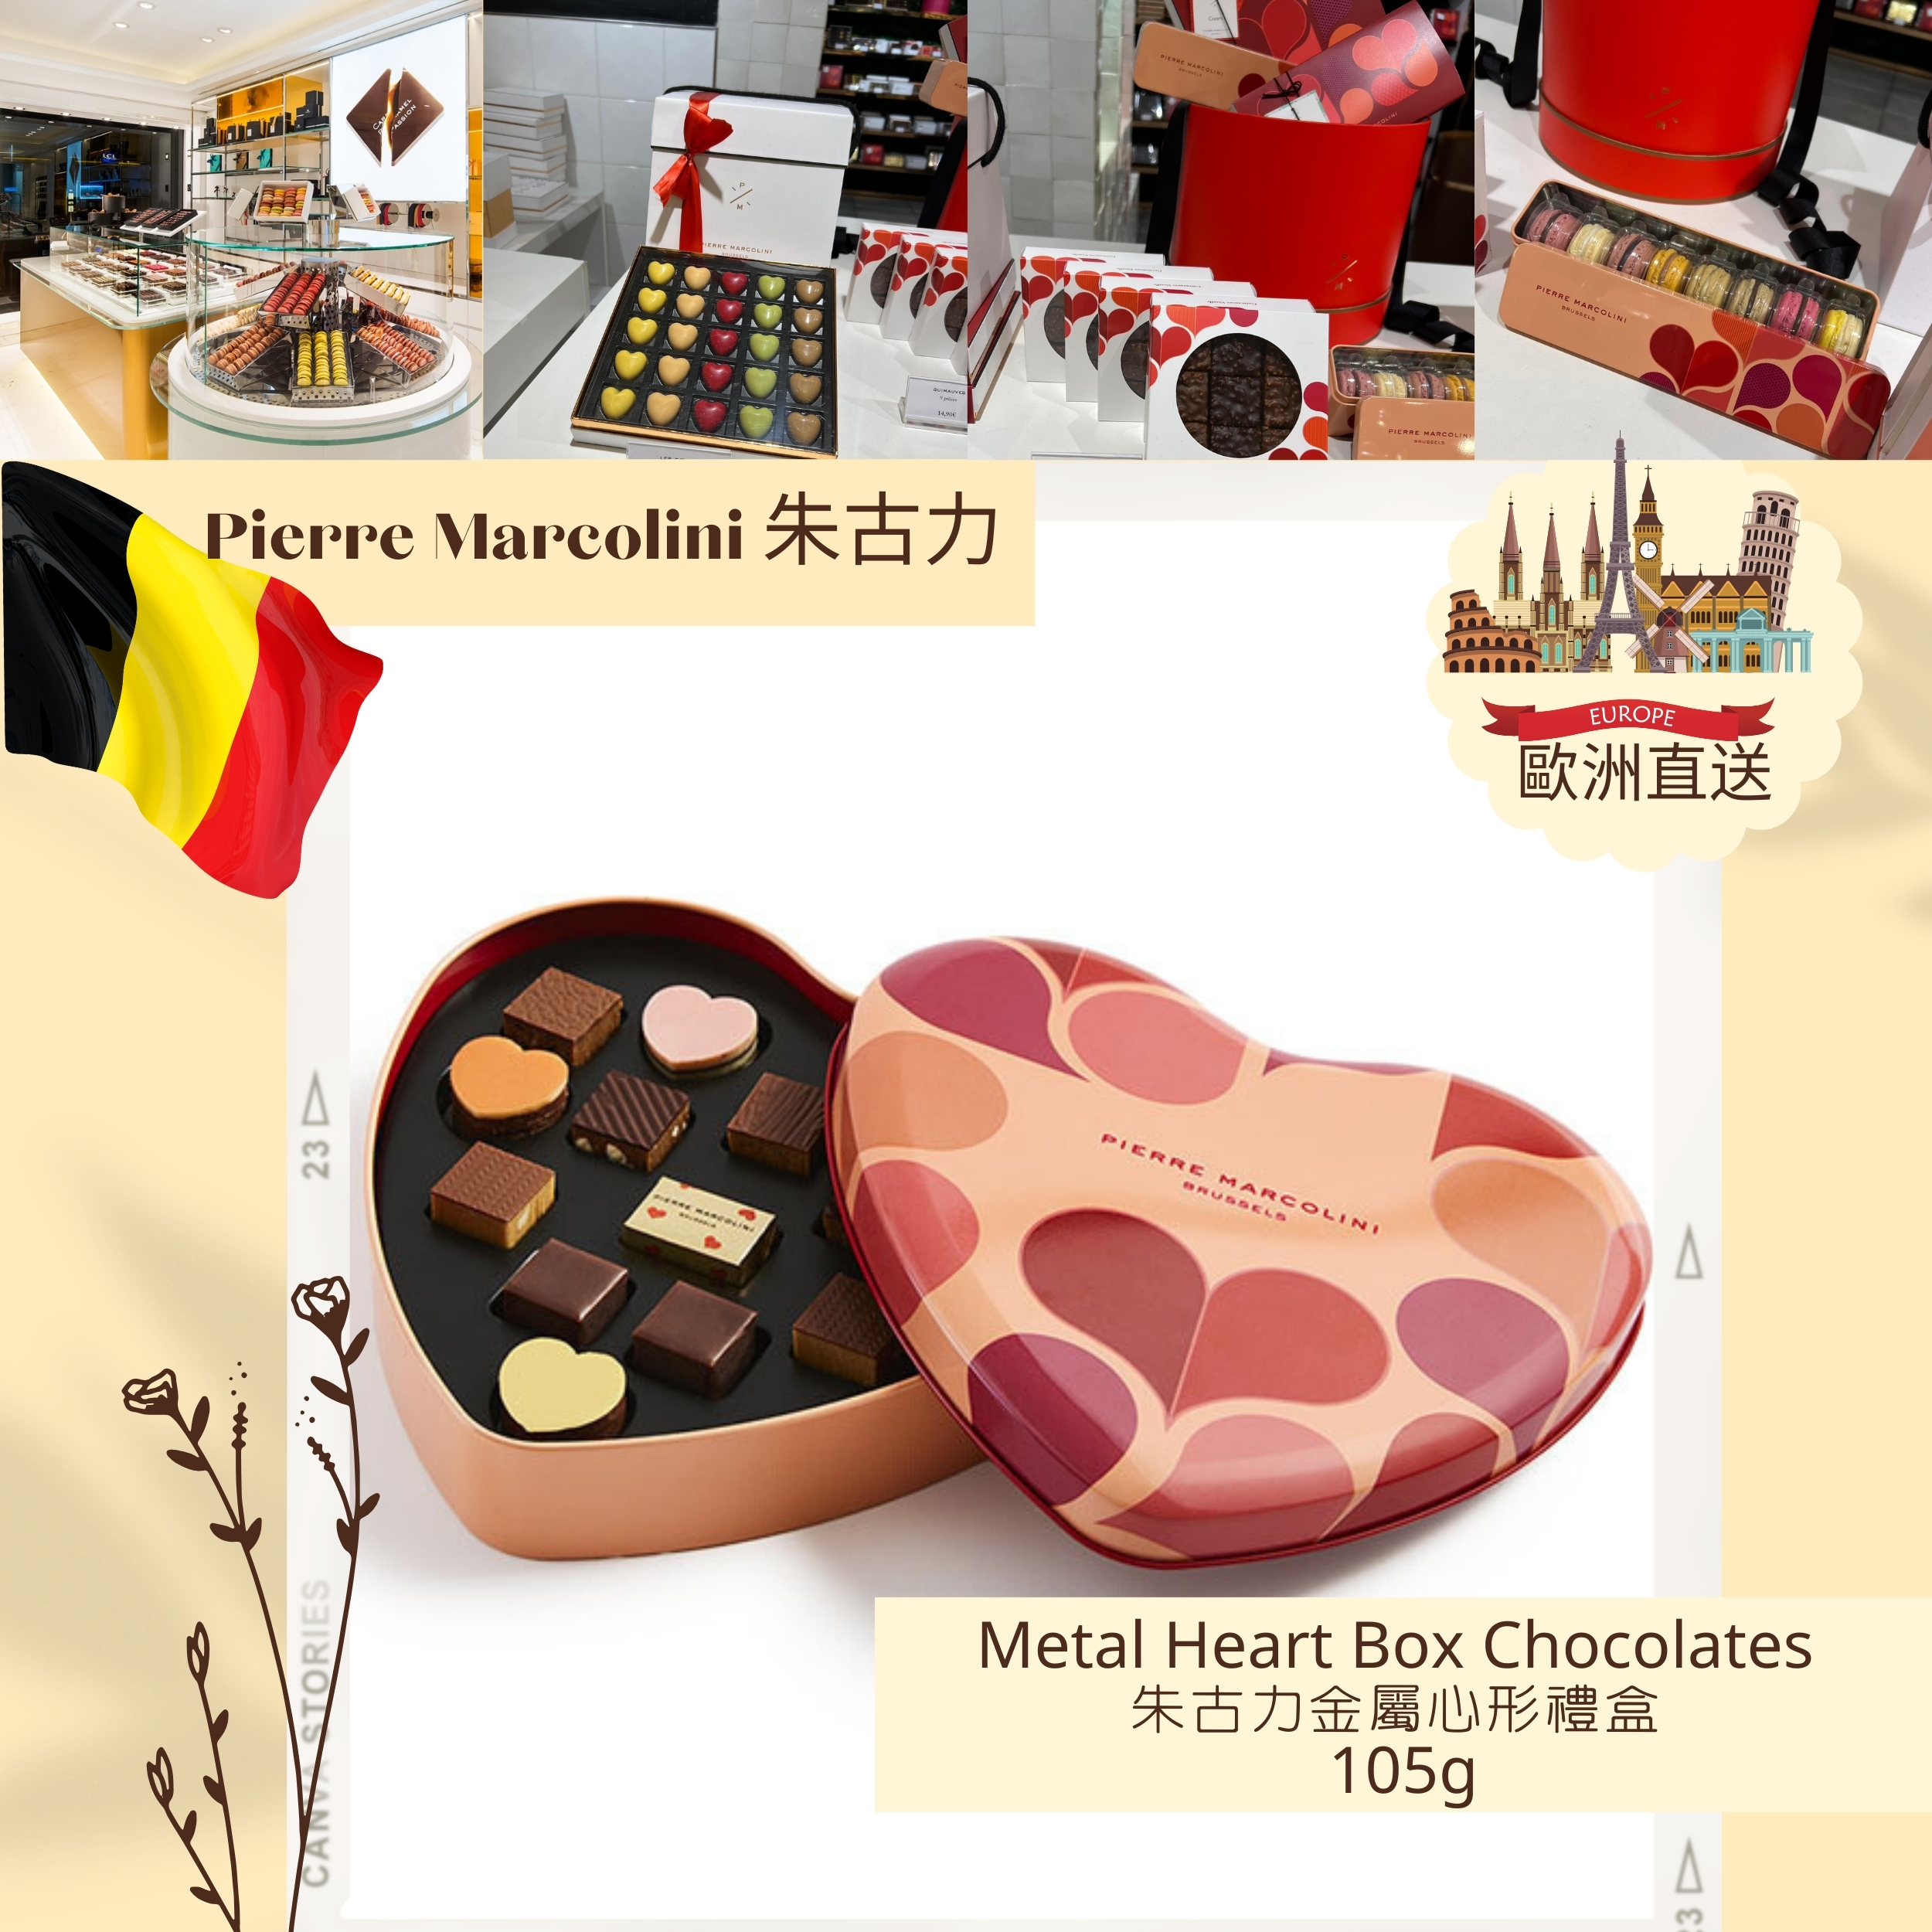 Pierre Marcolini 比利時頂級朱古力品牌 -  Metal Heart Box Chocolates 朱古力金屬心形禮盒 105g |  情人節限定  | 情人節用一盒朱古力分享愛